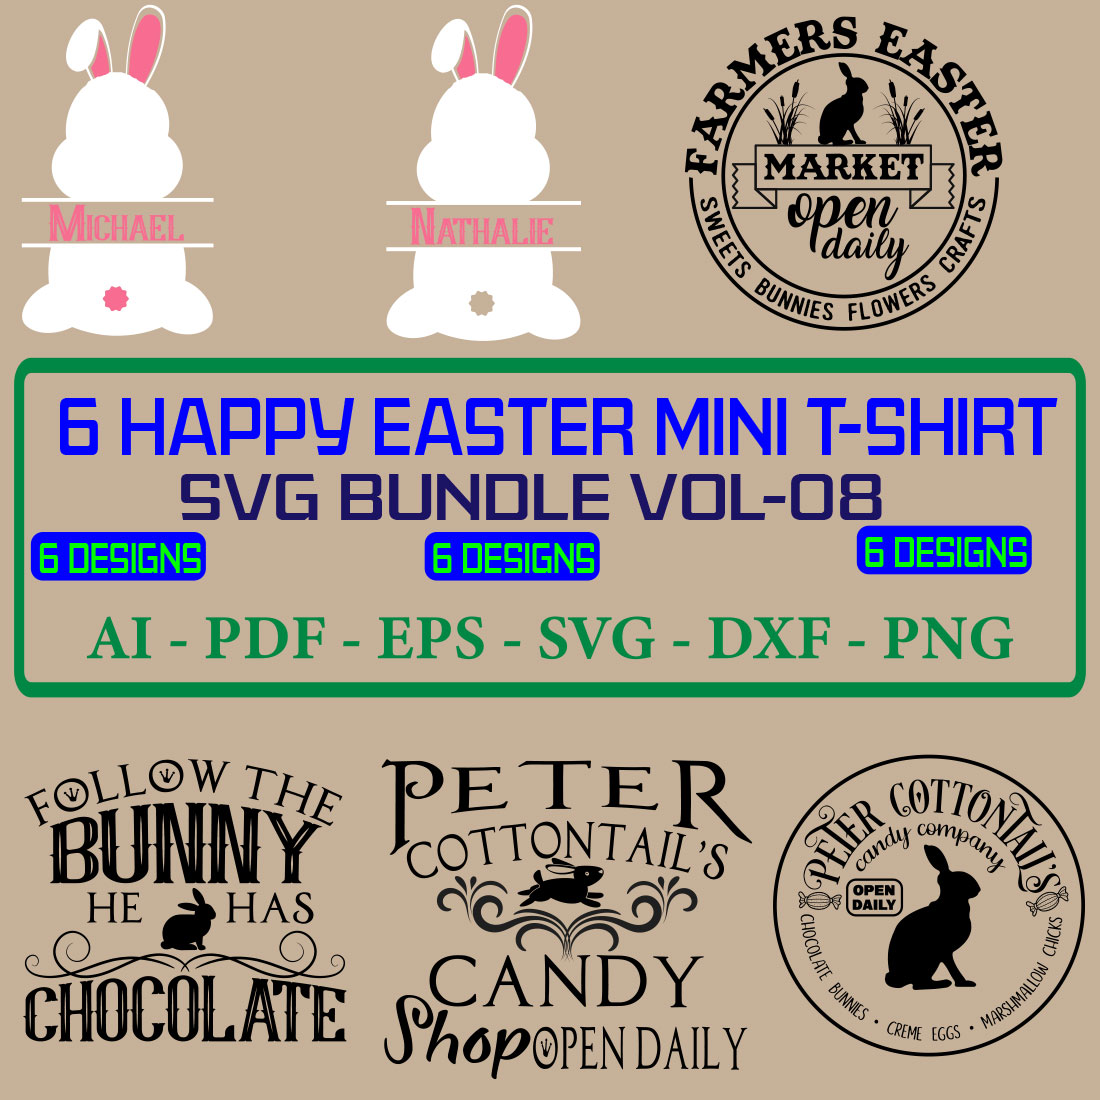 6 Easter Mini T-shirt SVG Bundle Vol 08 cover image.